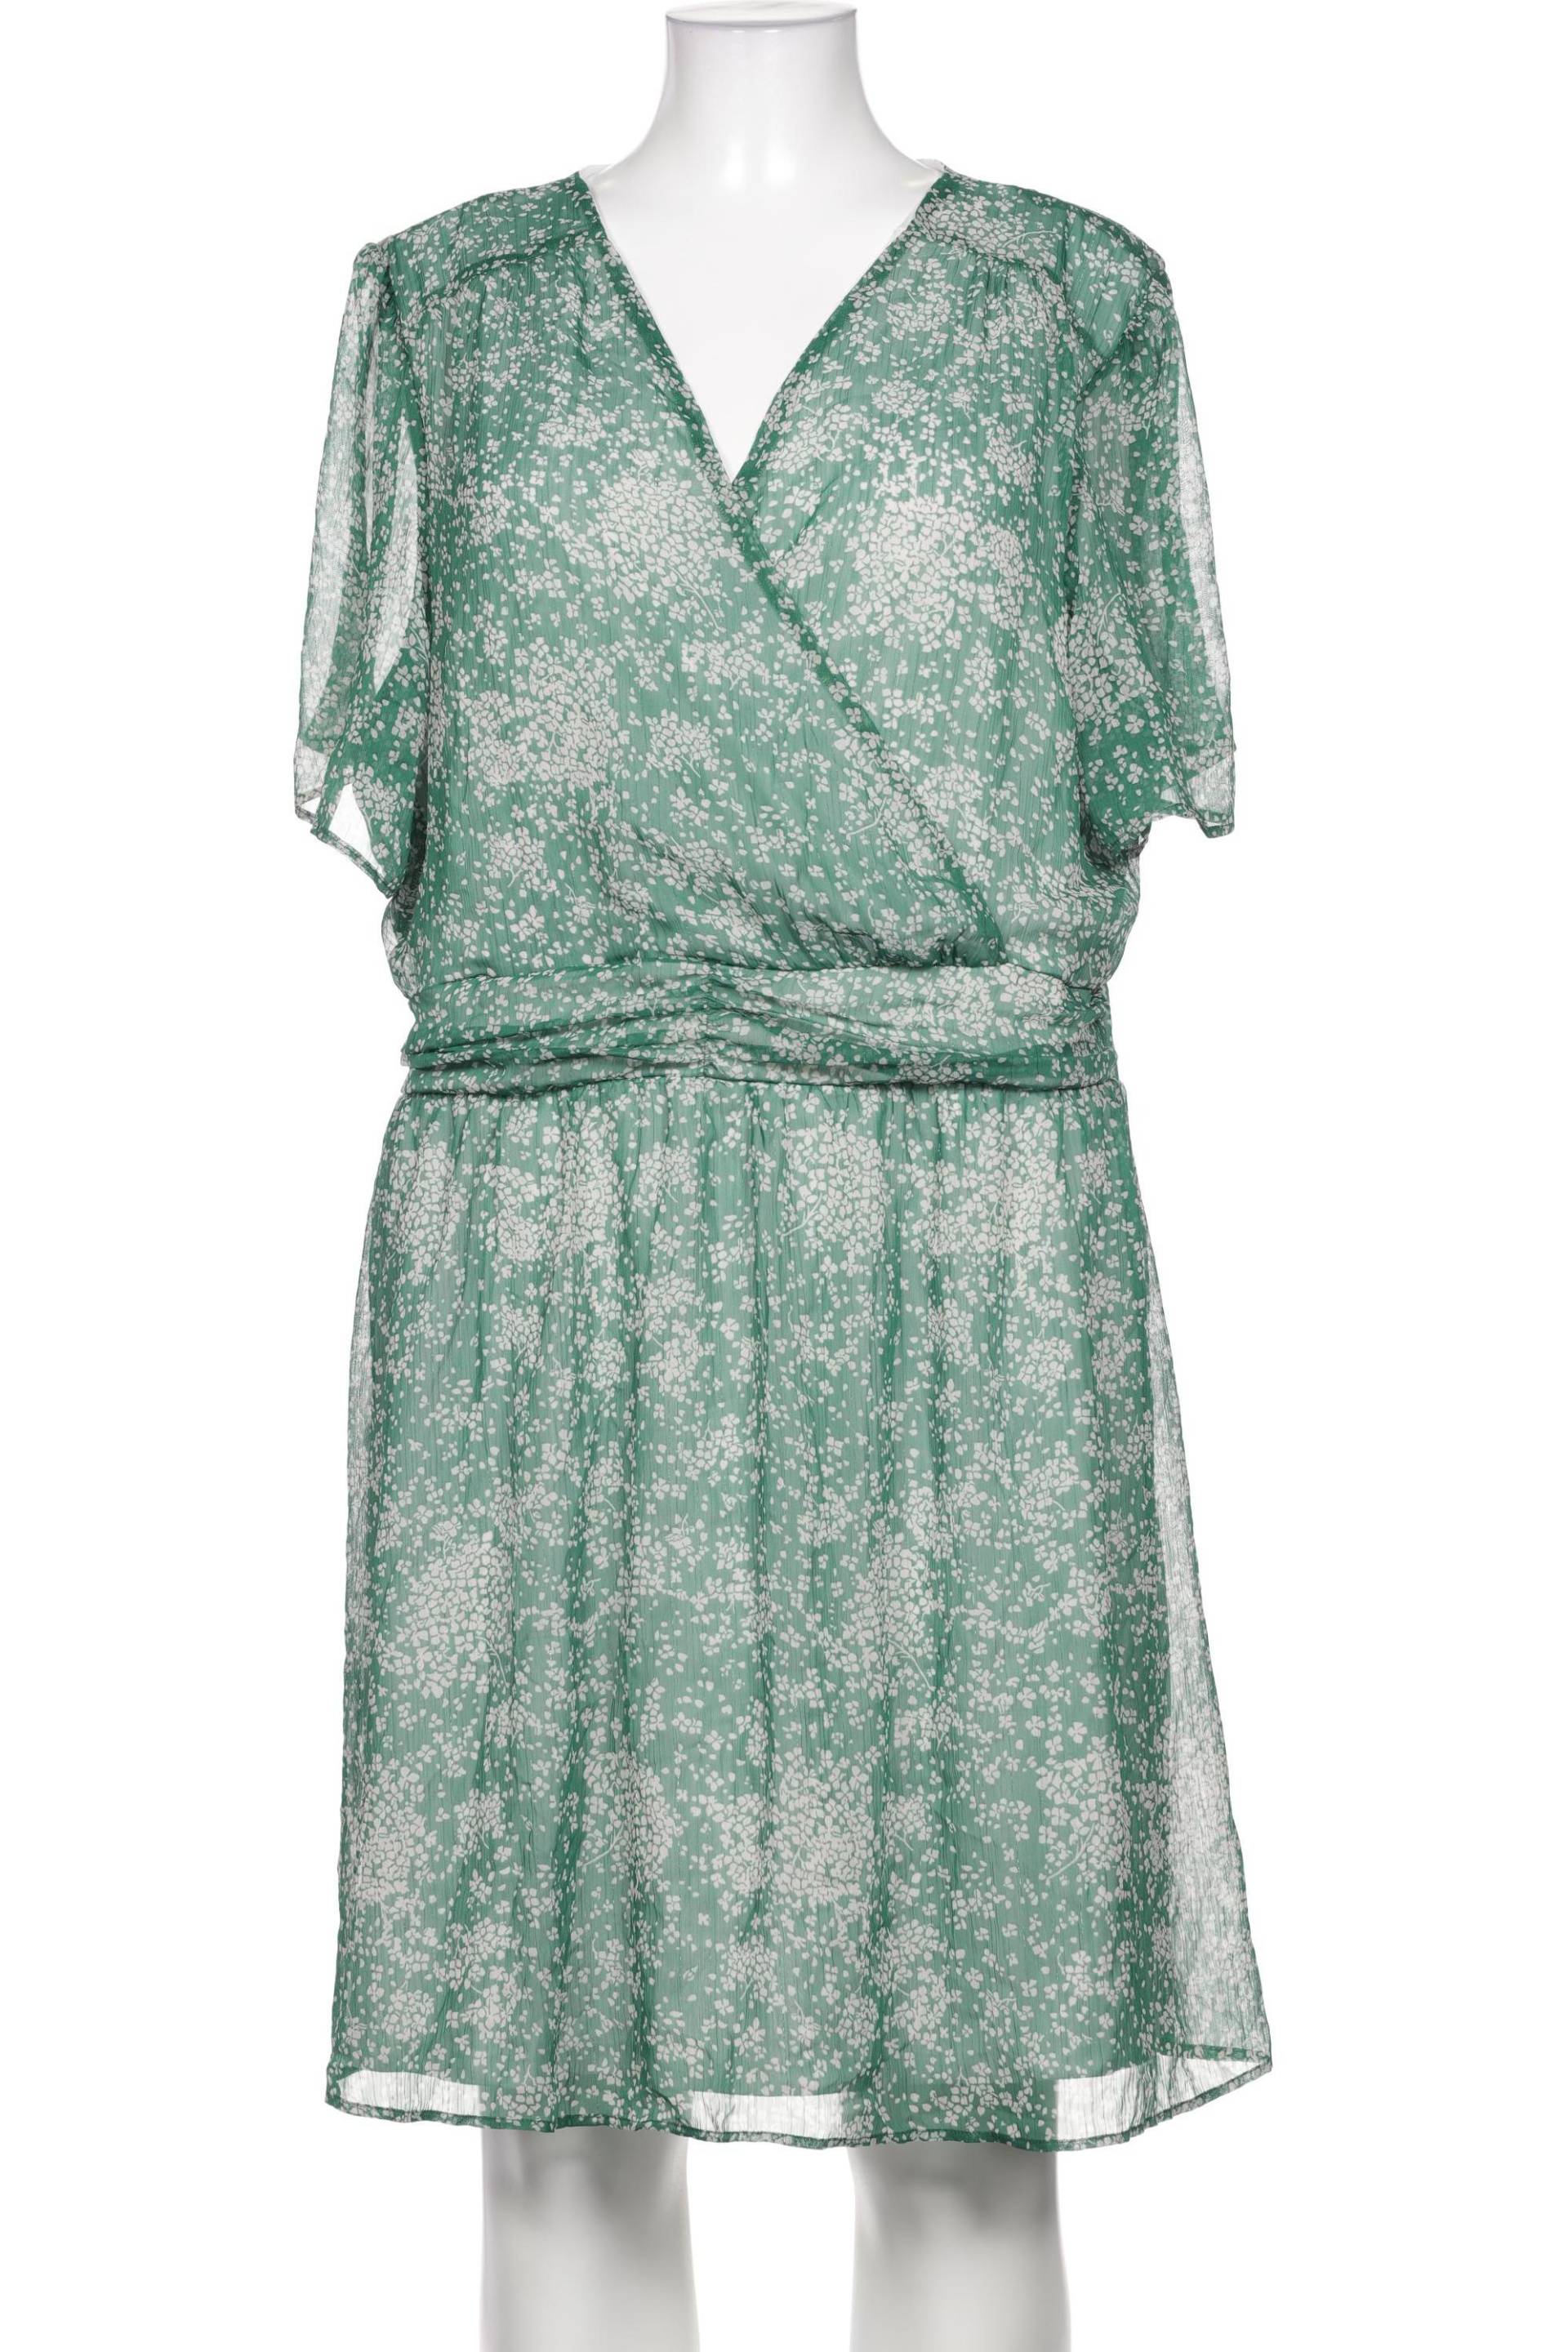 Kiabi Damen Kleid, grün, Gr. 52 von Kiabi